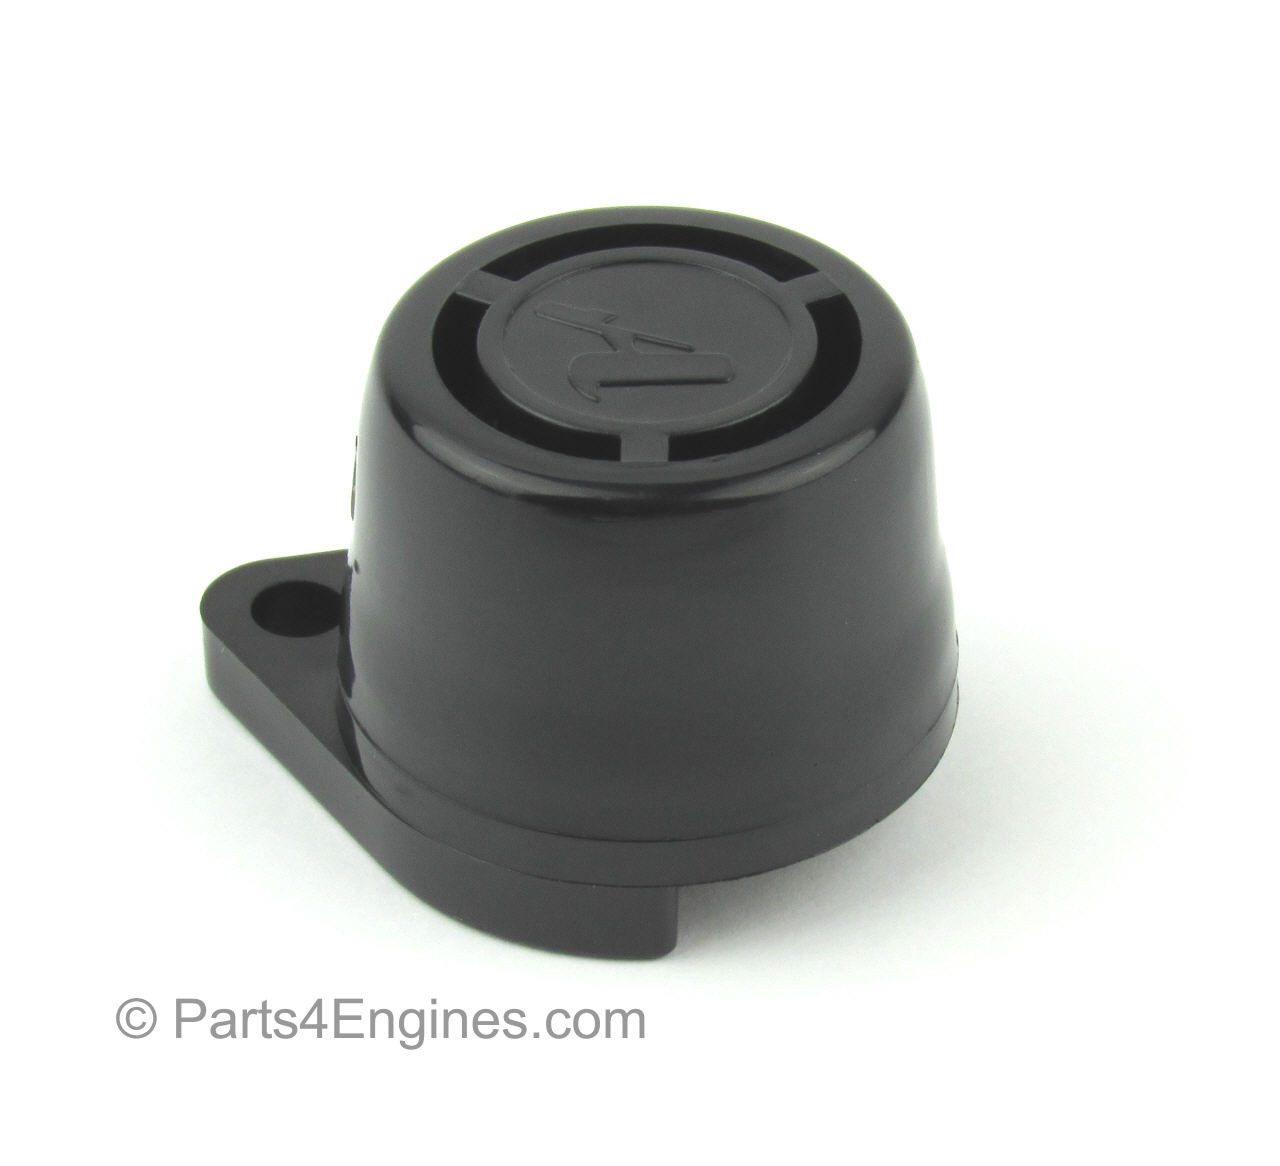 Perkins M92 Low oil pressure alarm / buzzer from Parts4engines.com